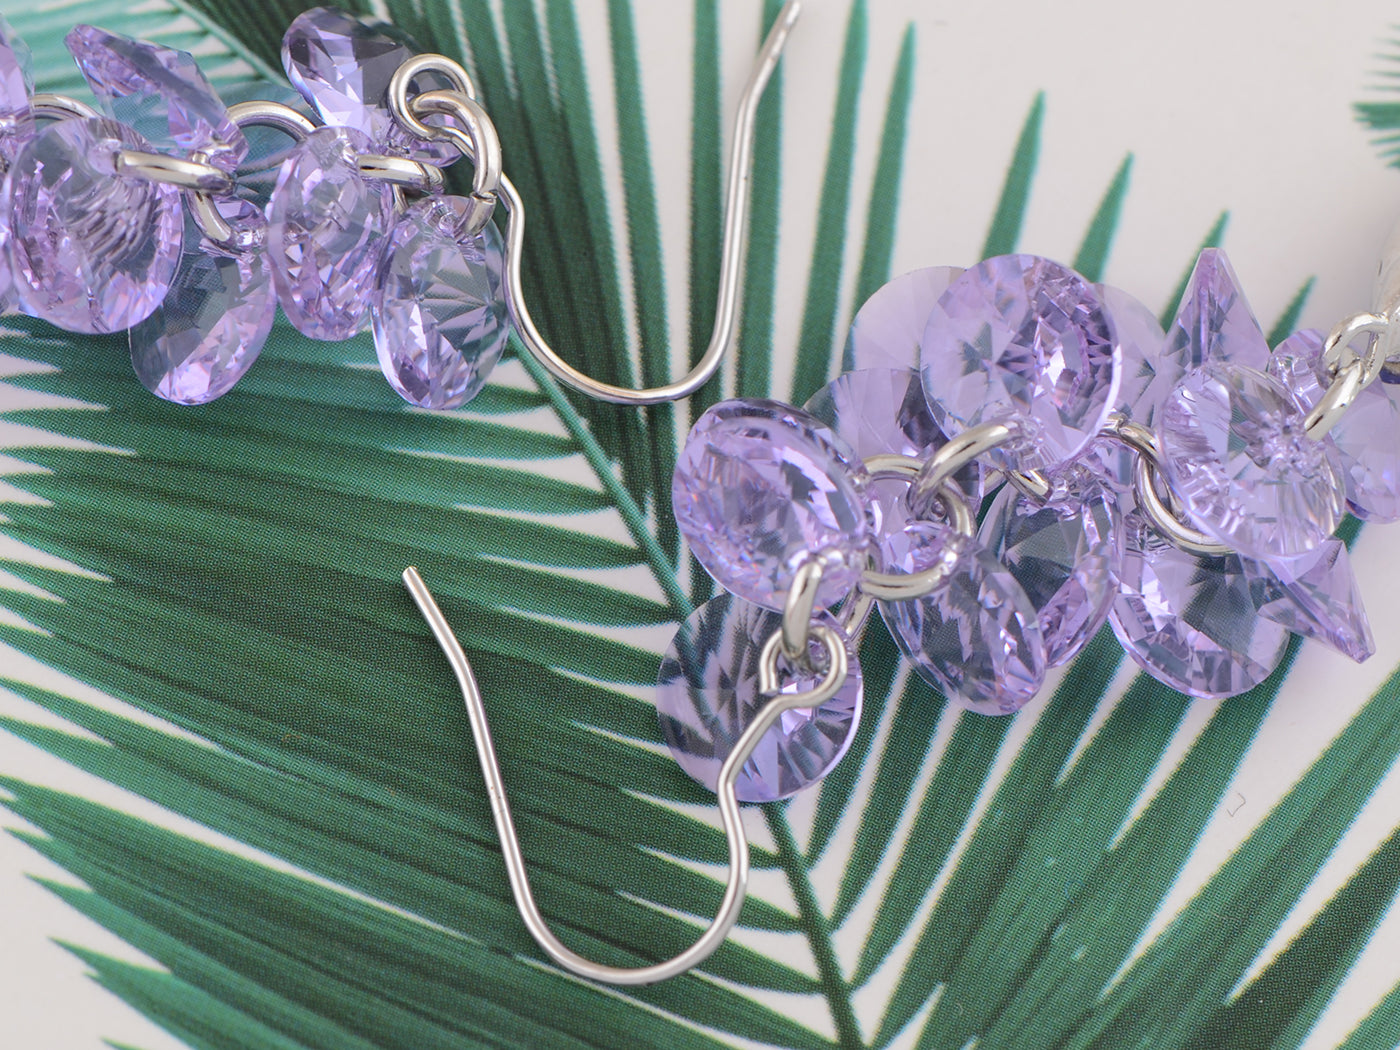 Purple Swarovski Crystal Teardrop Beads Cluster Hook Dangle Earrings